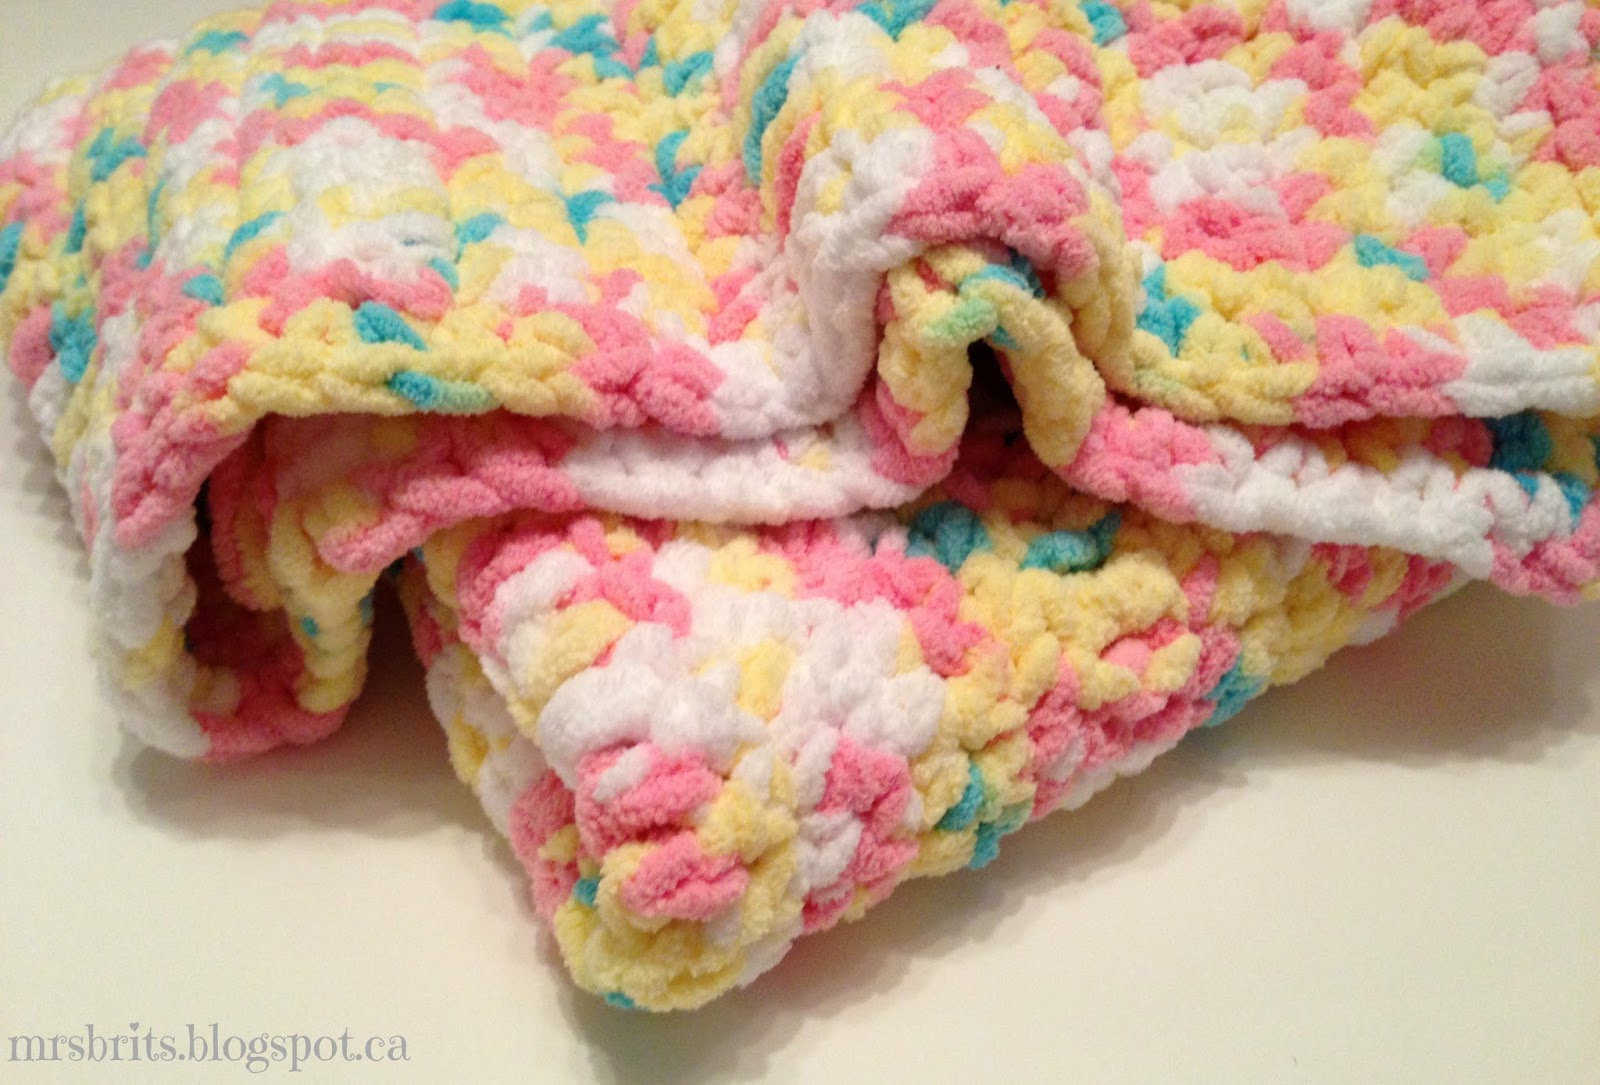 Bulky Yarn Crochet Patterns Free Mrsbrits Sweet And Chunky Ba Afghan Crochet Pattern